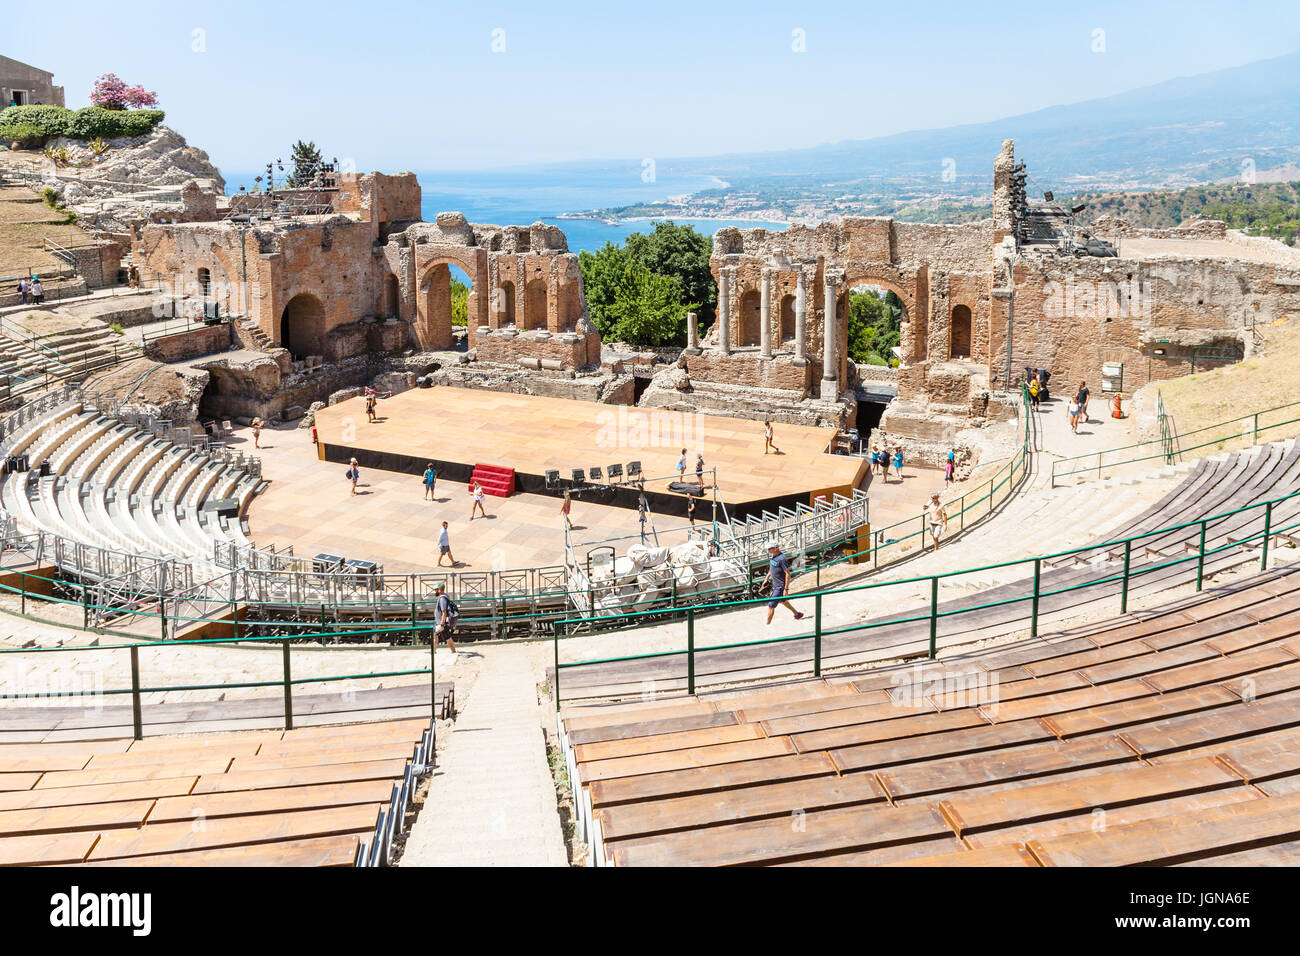 TAORMINA, ITALY - JUNE 29, 2017: people in Teatro antico di Taormina, ancient Greek Theater (Teatro Greco) in Taormina city in summer day. The amphith Stock Photo